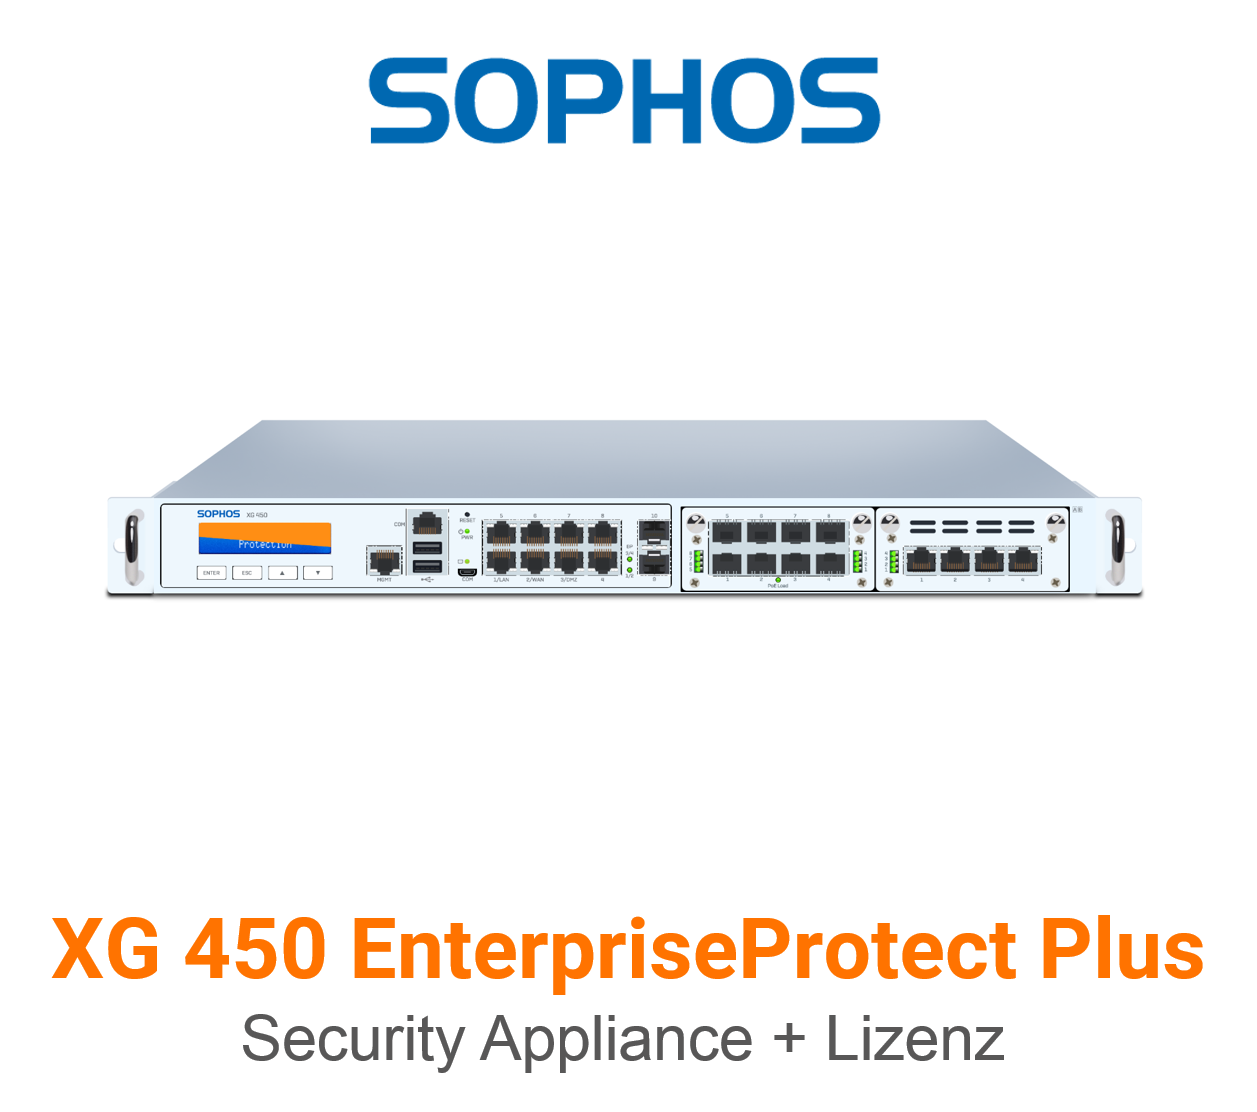 Sophos XG 450 EnterpriseProtect Plus Bundle (Hardware + Lizenz)